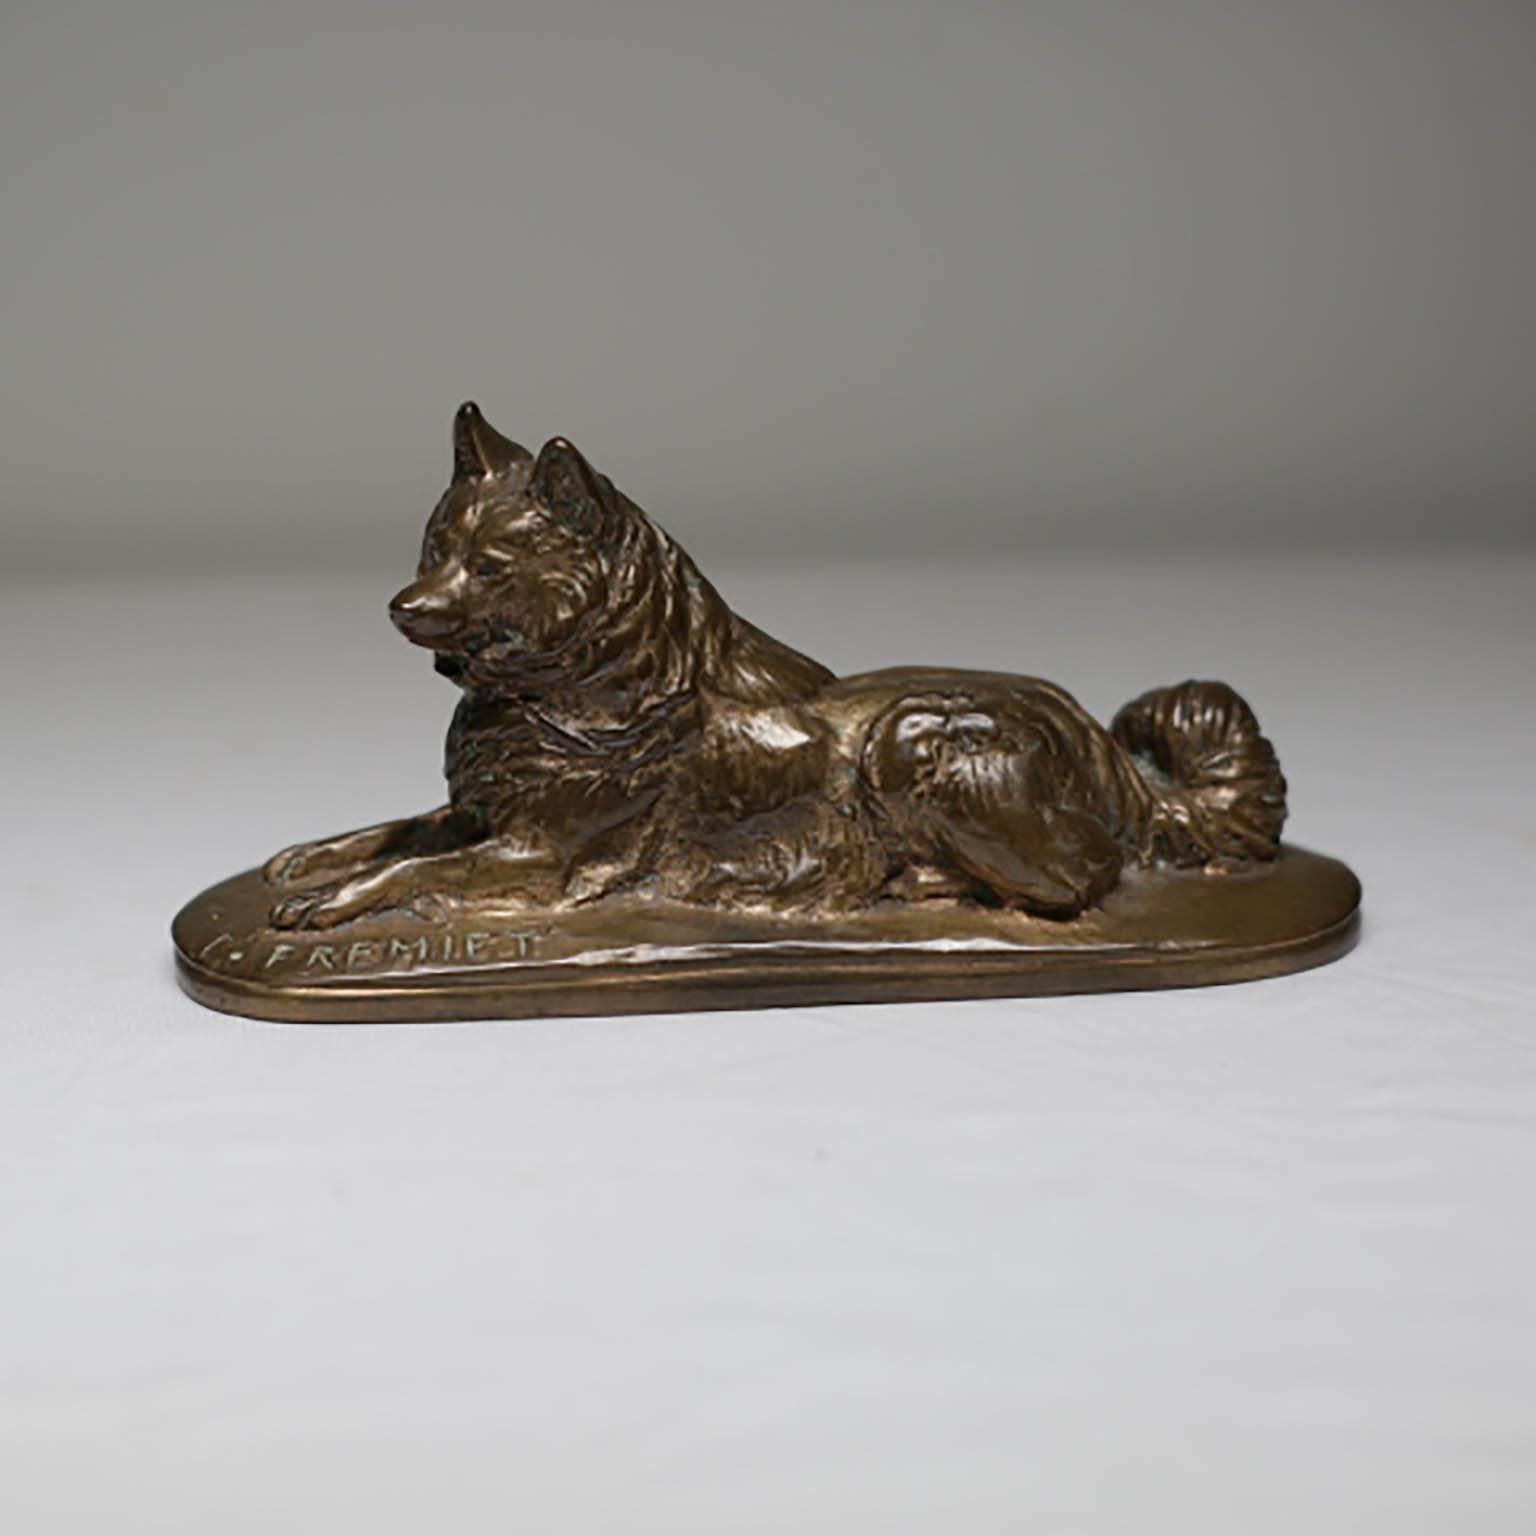 19th century signed Fremiet bronze dog, circa 1800s.